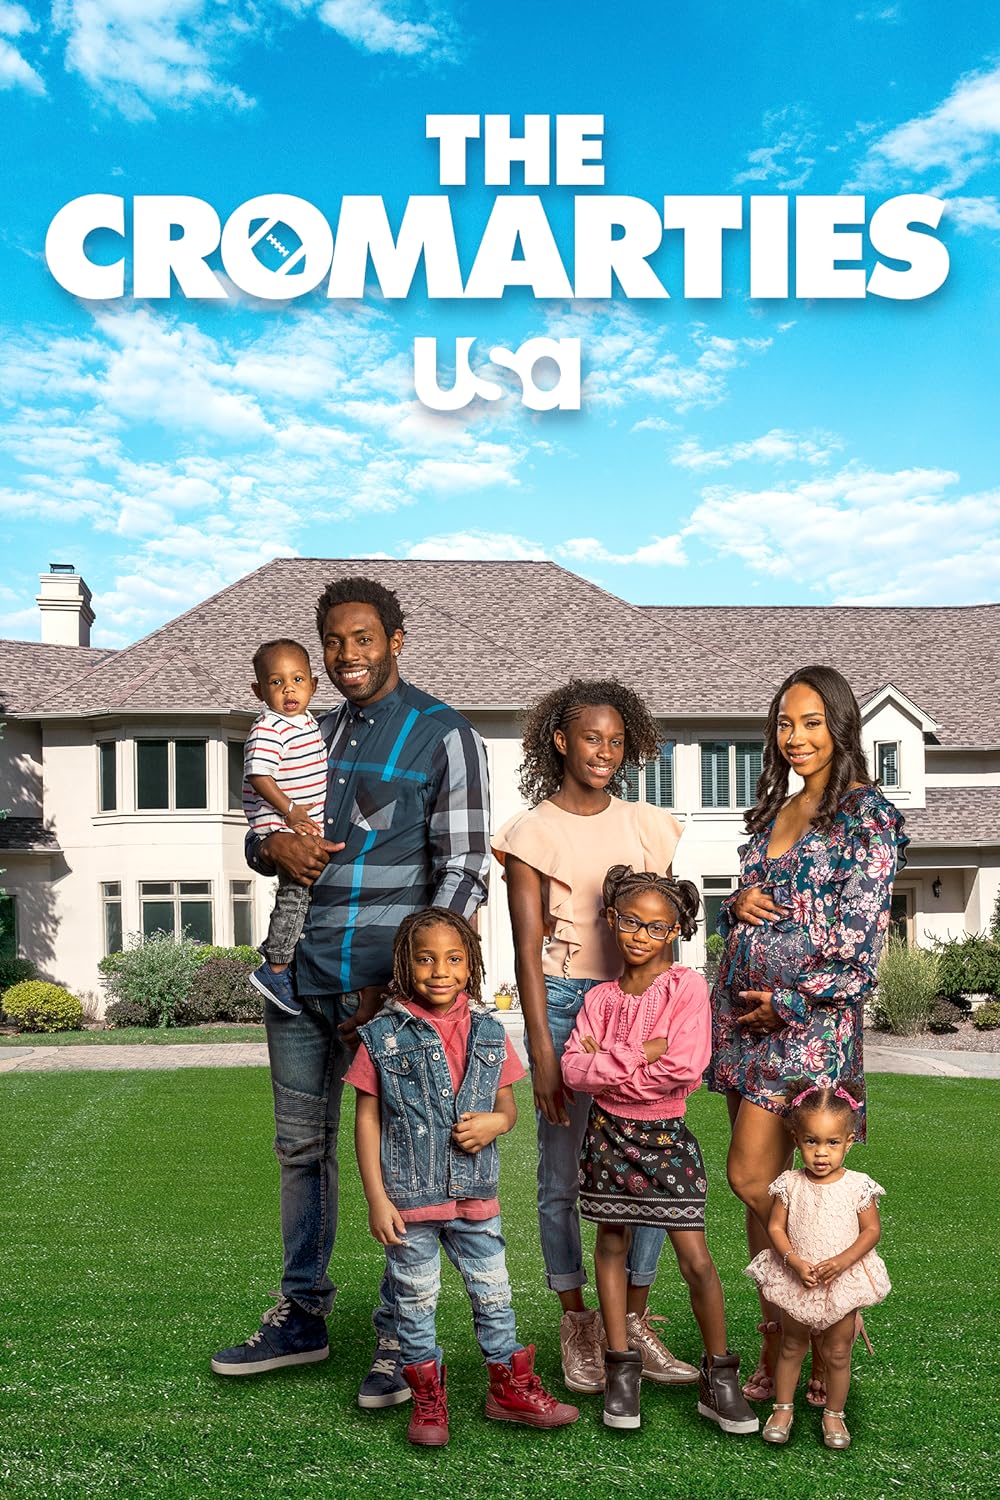 The Cromarties